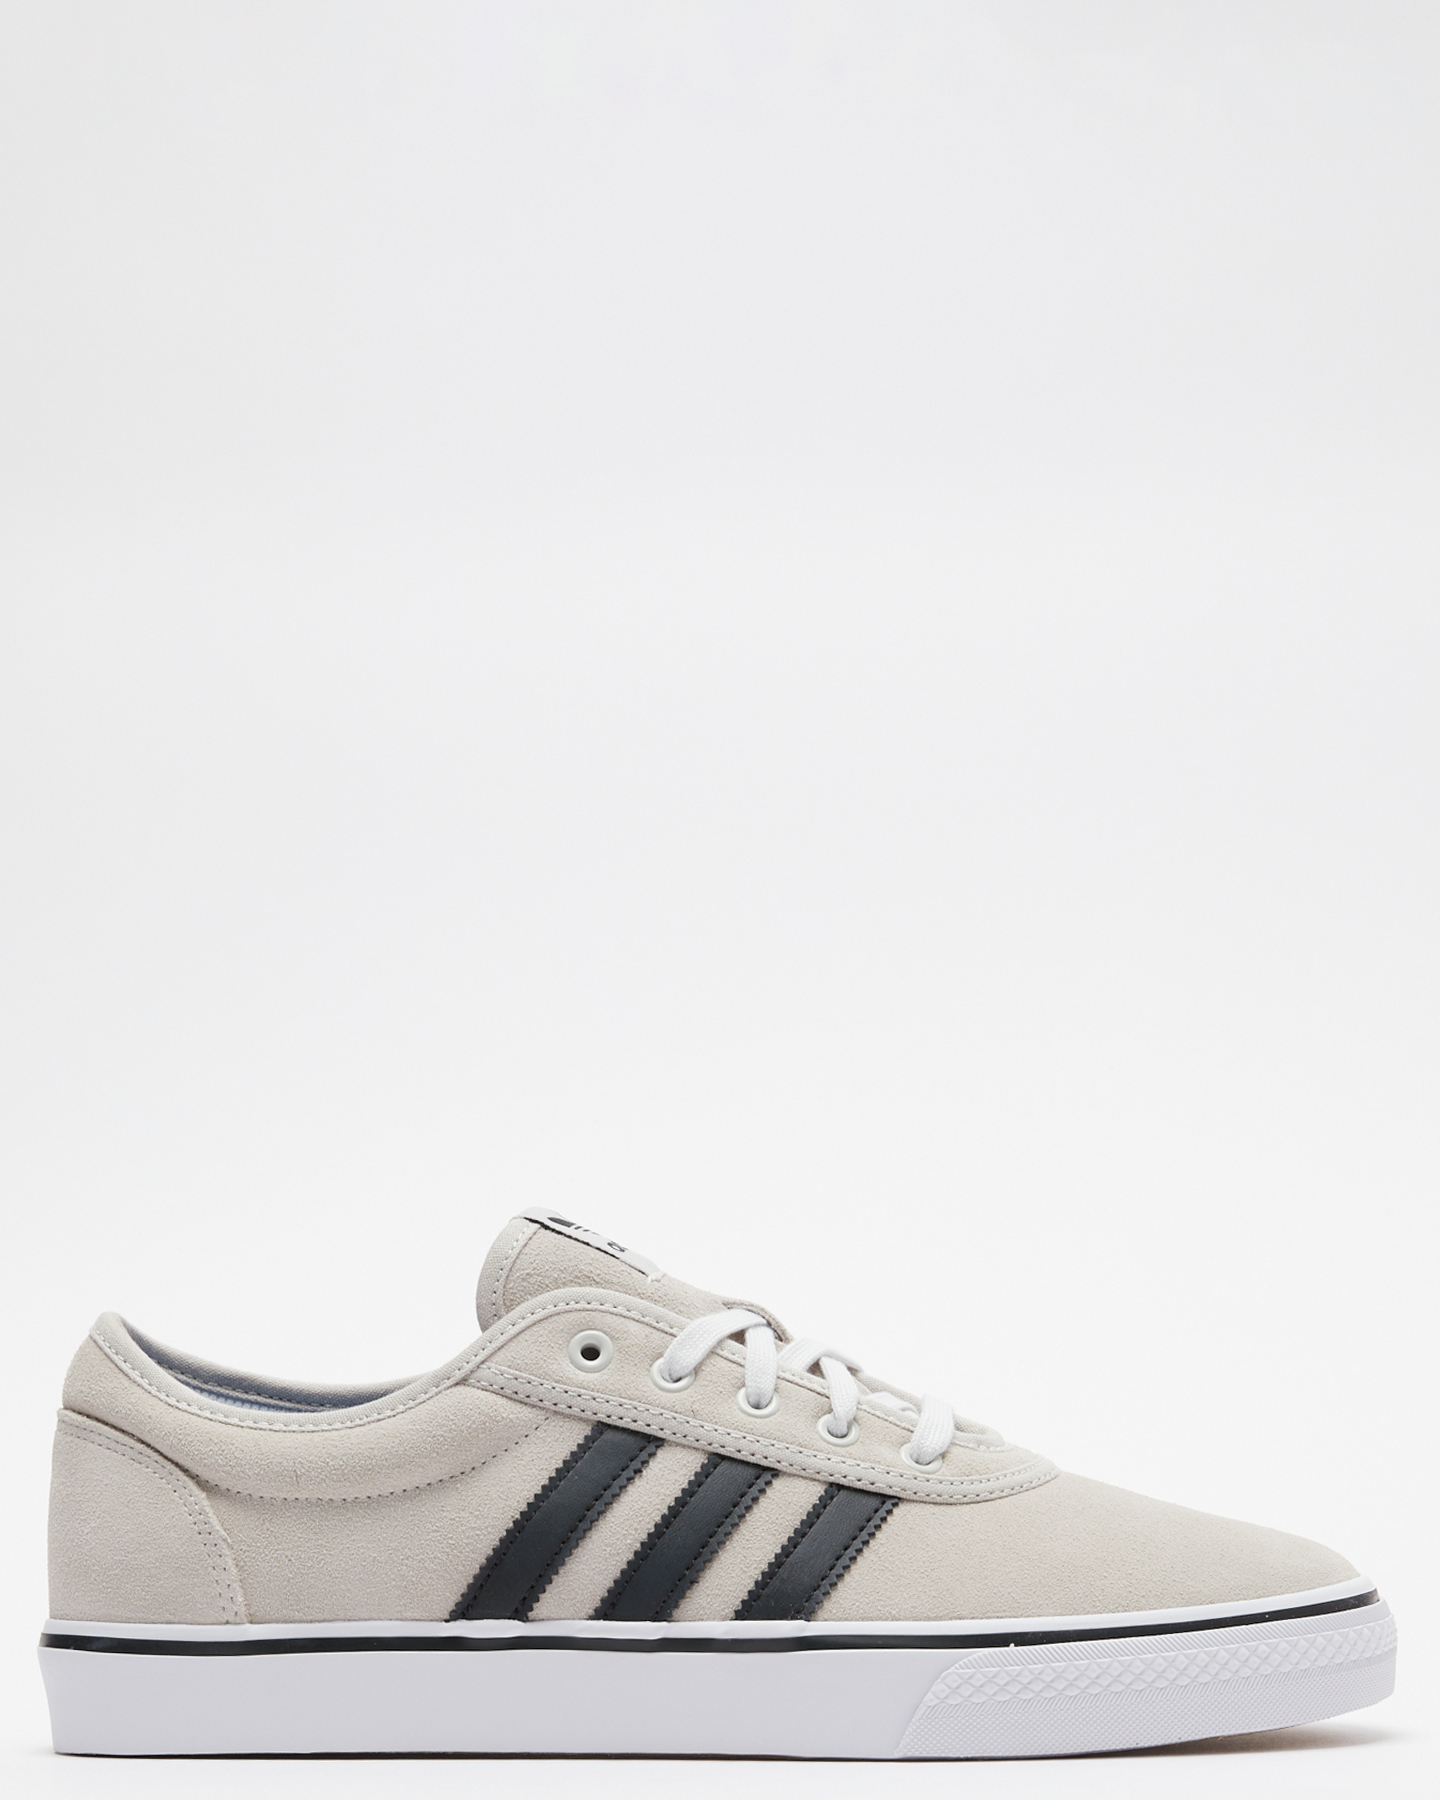 Adidas Adi Ease Shoe White Grey - Grey Grey | SurfStitch